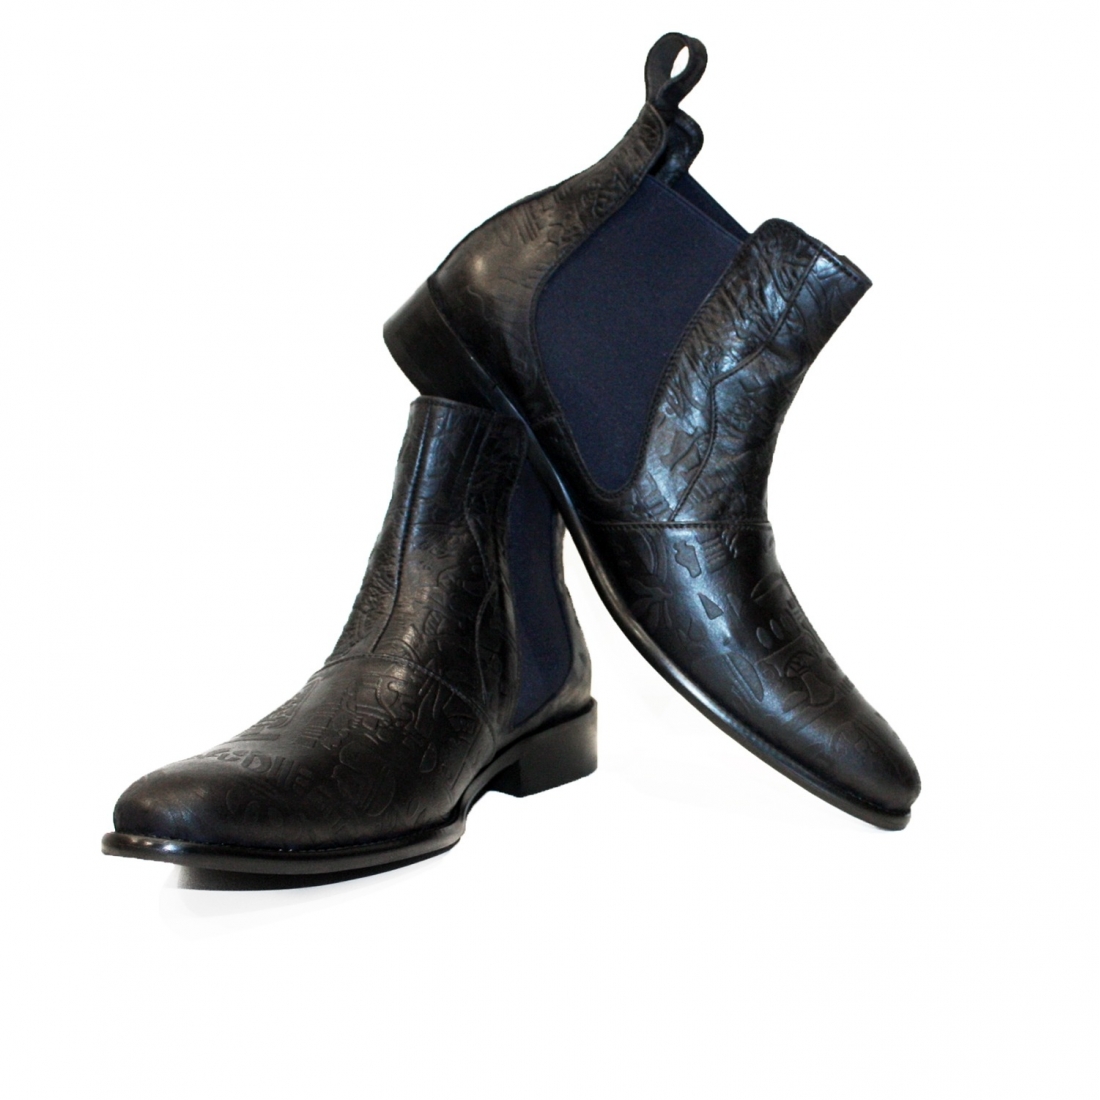 Modello Turtello - Chelsea Boots - Handmade Colorful Italian Leather Shoes